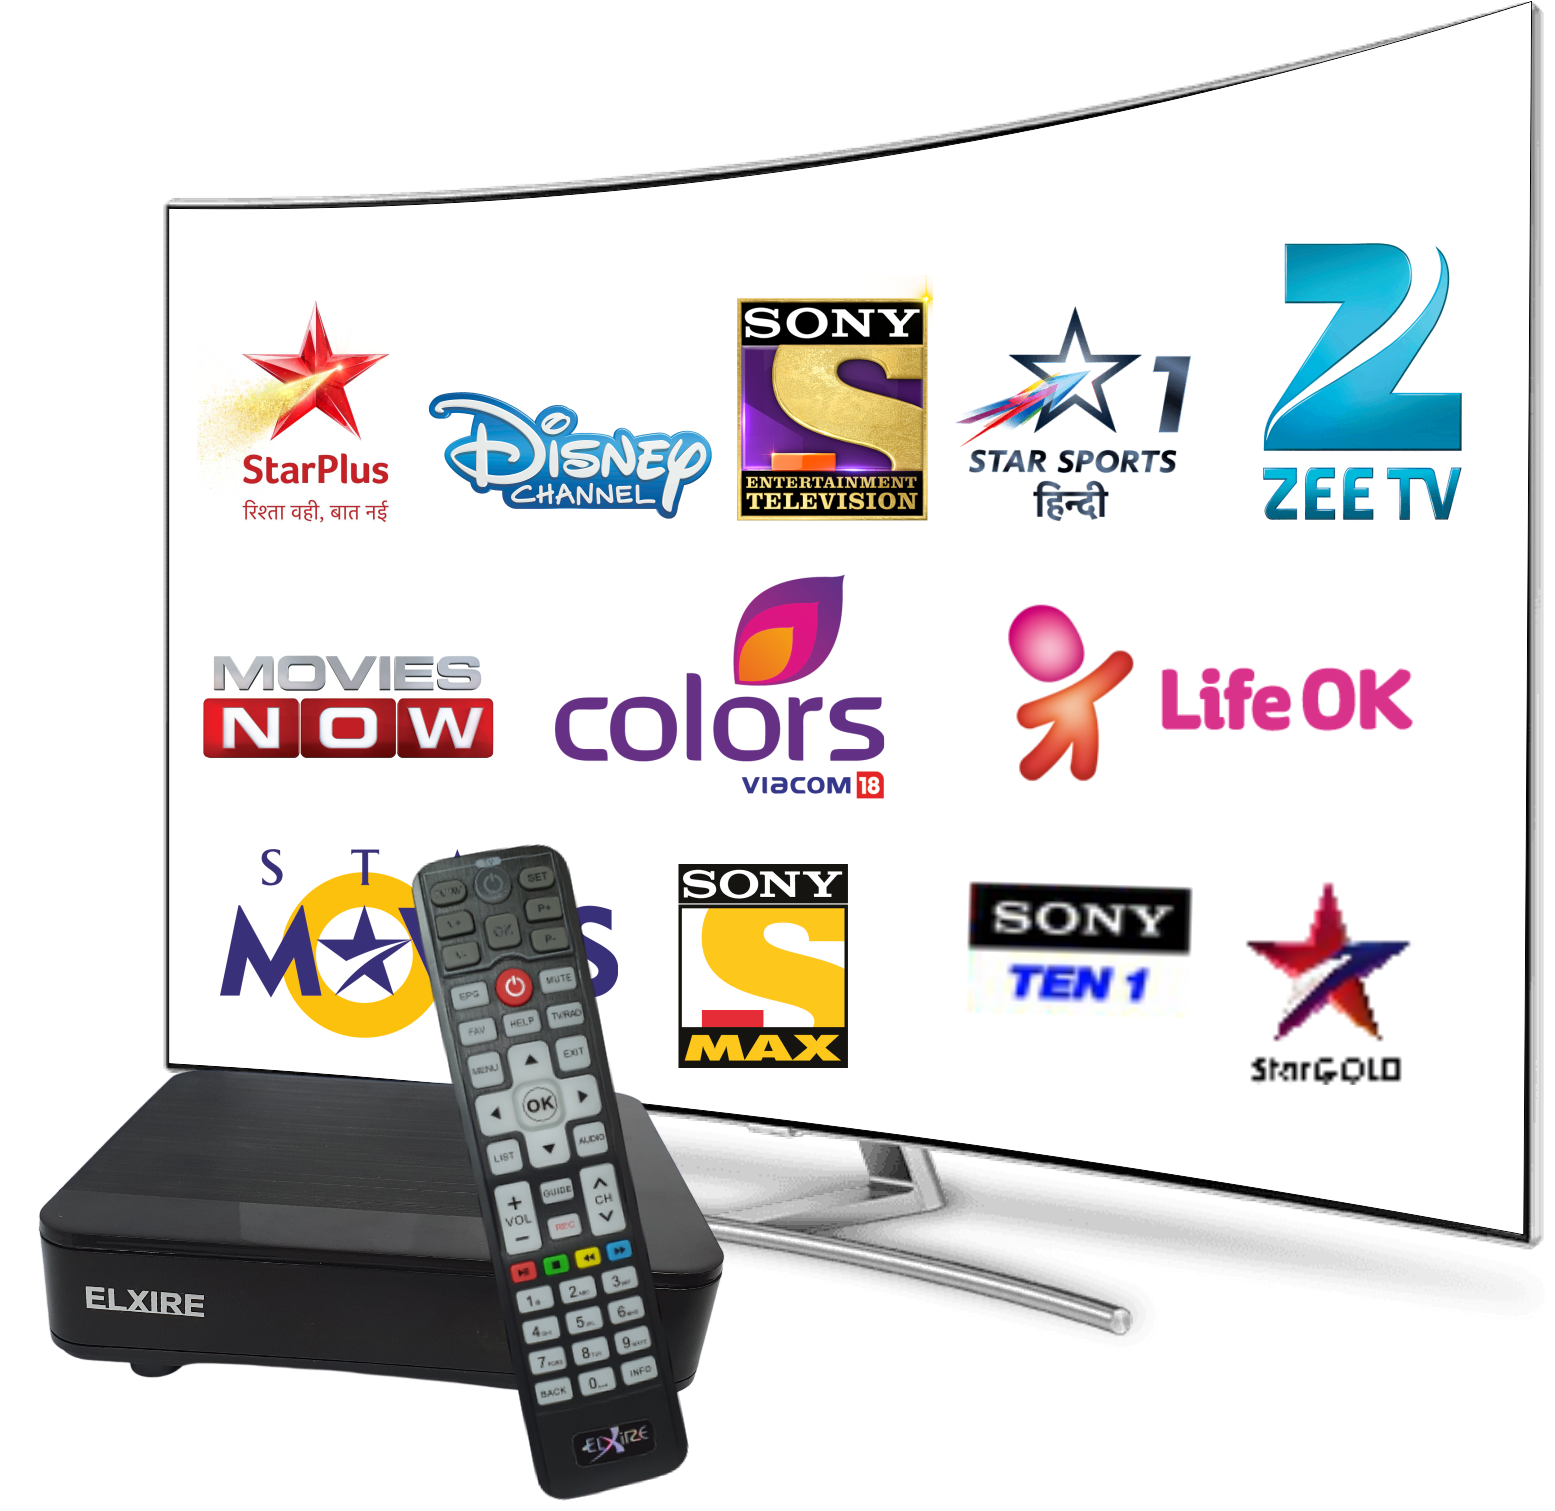 Elxire Digital Cable TV Service Provider in Faridabad, India  Cable TV